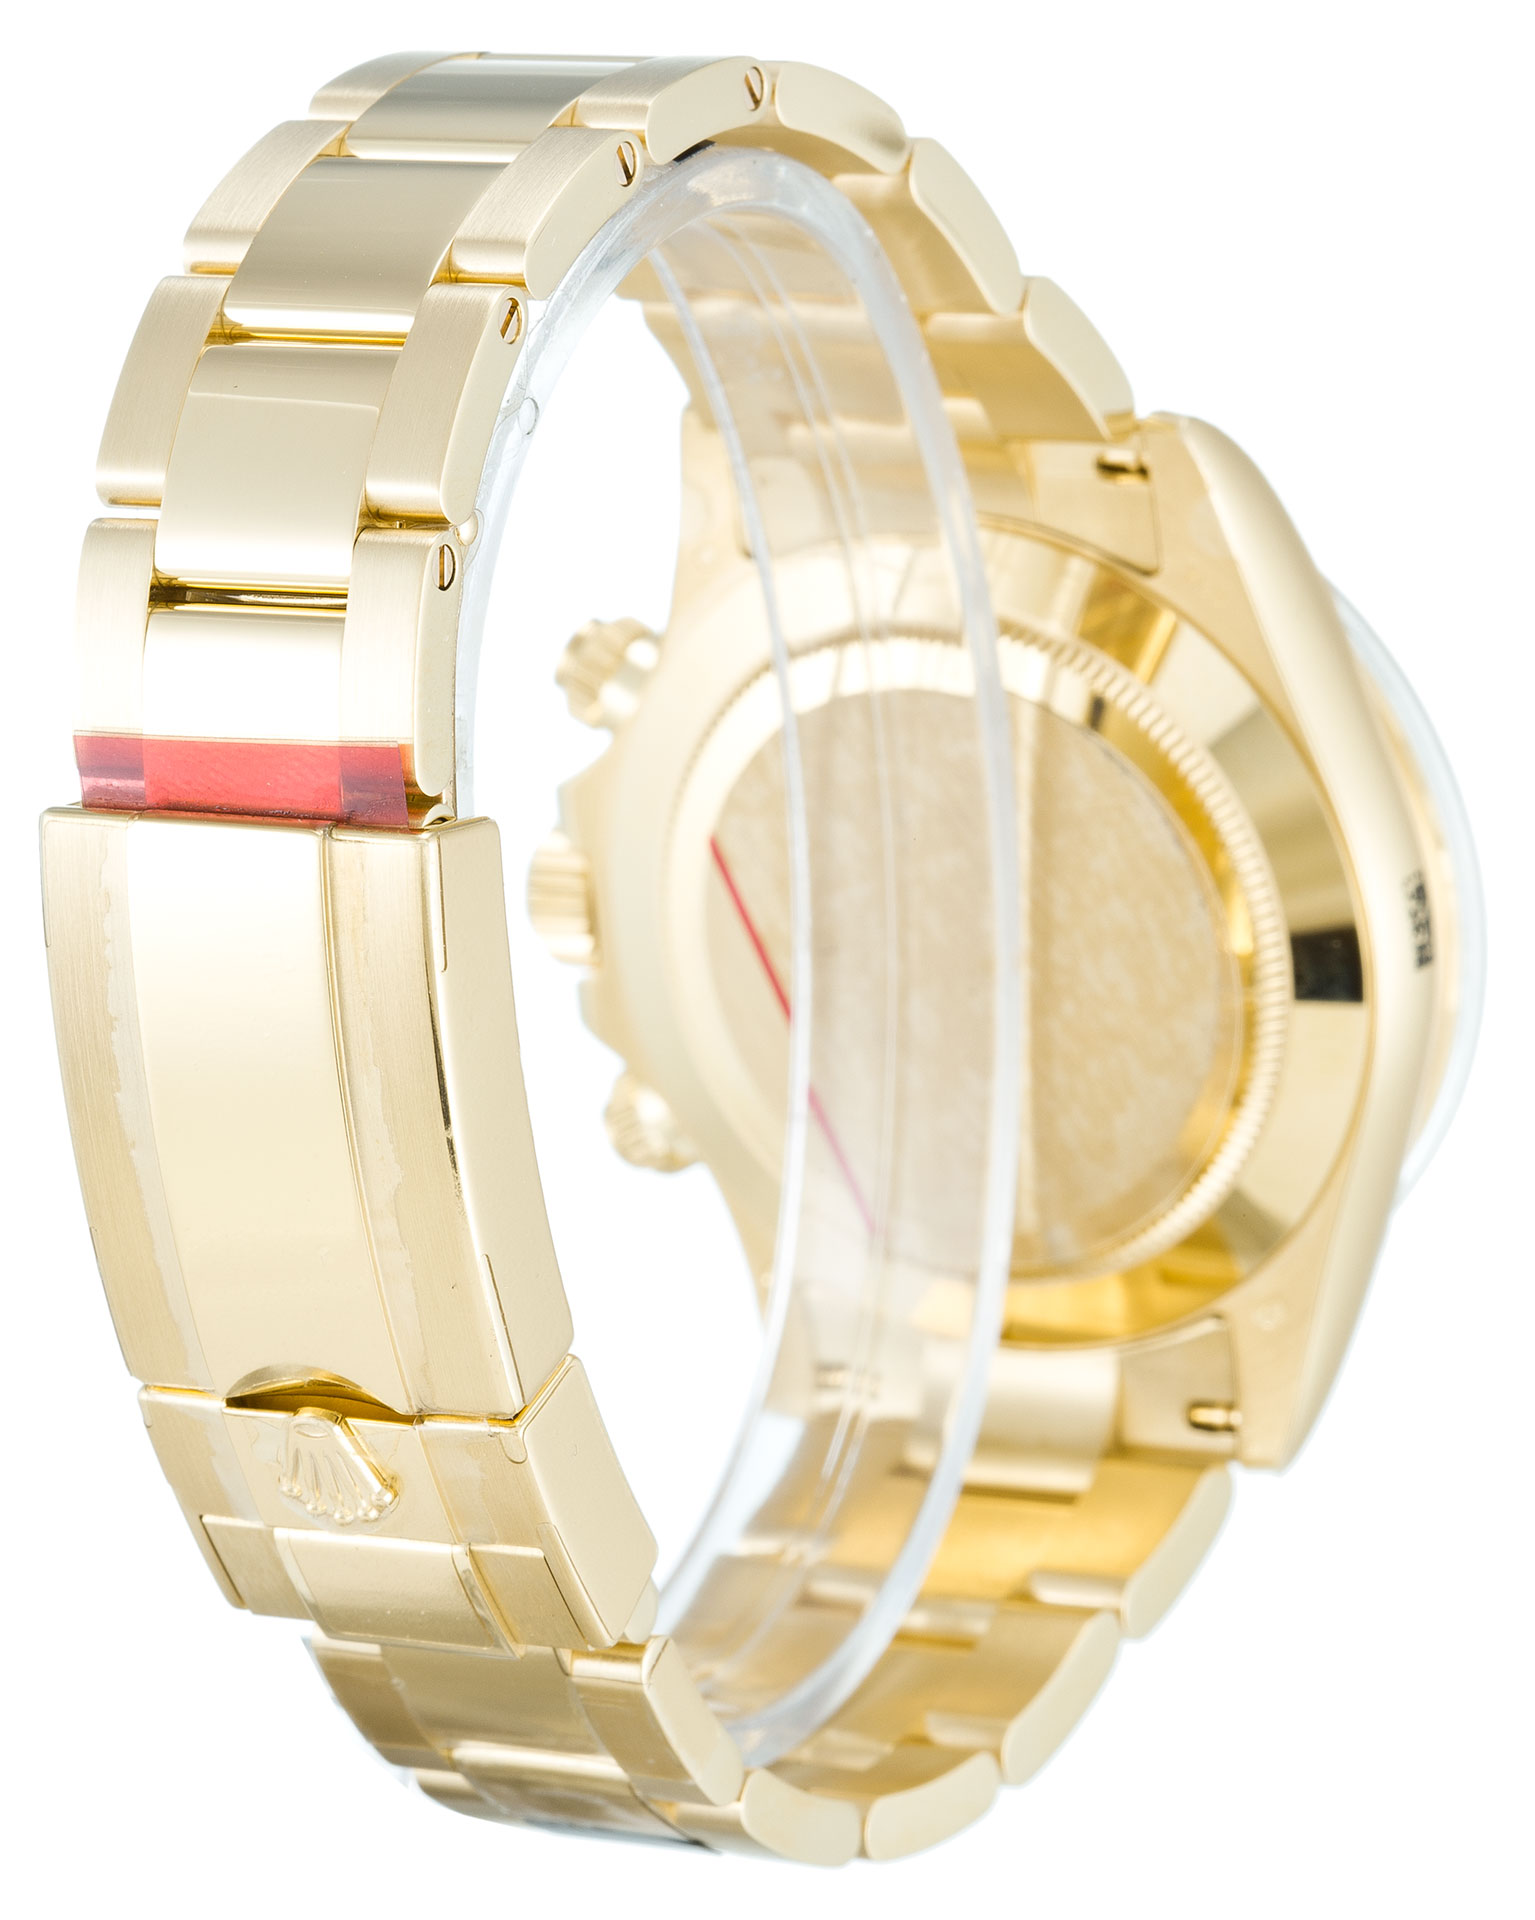 Rolex Daytona 116528-40MM | Fake Watches |Dubai Watch Stores